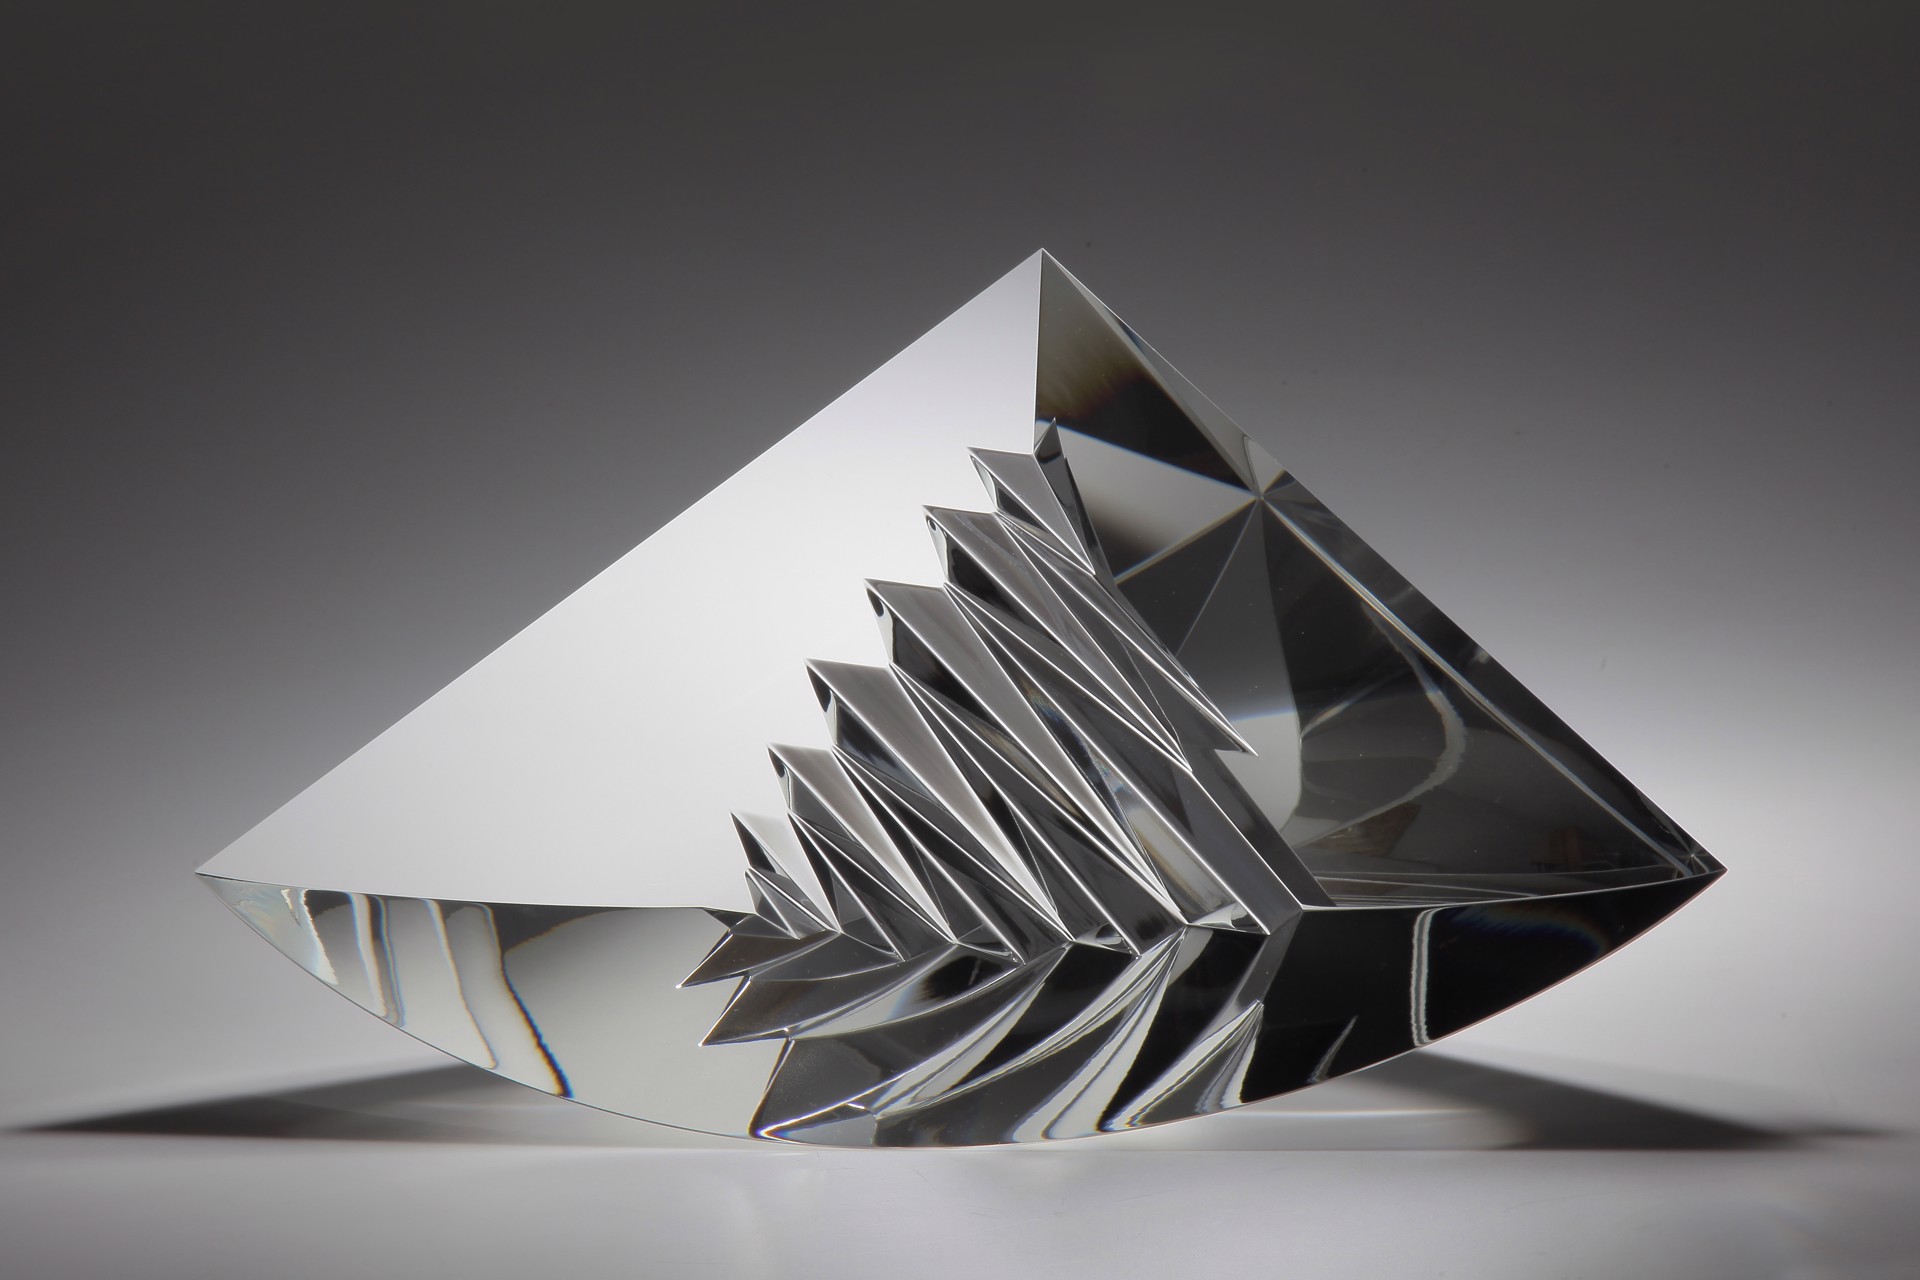 "Pyramid In Crystal" by Tomáš Brzon